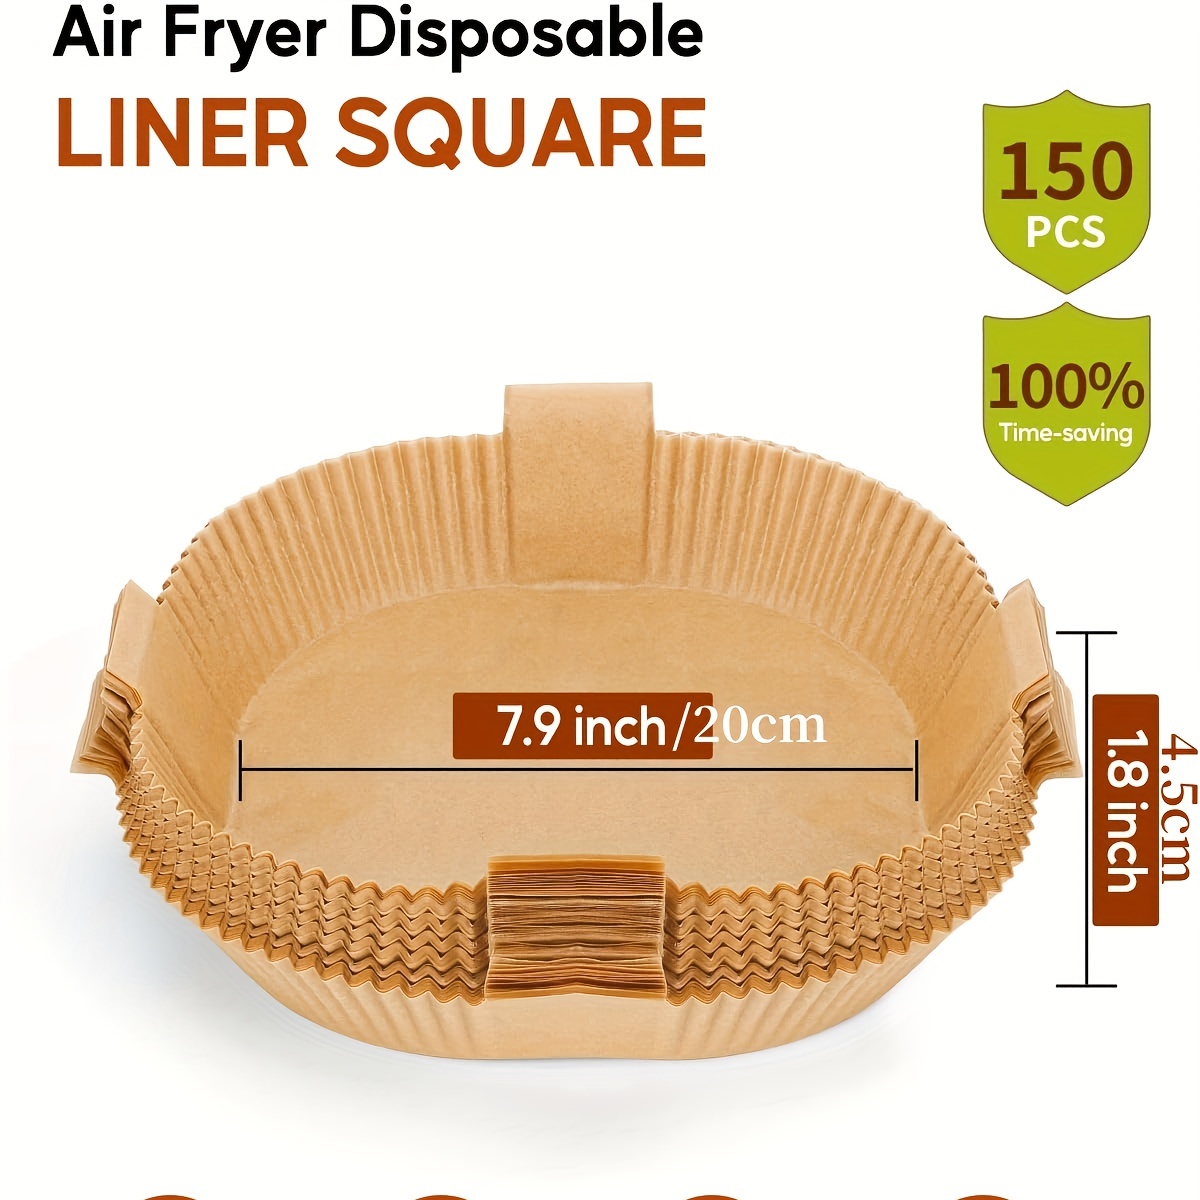 120 PCS Air Fryer Disposable Paper Liner Square, 8-inch (Fit 5-8 QT)  Non-stick Parchment Paper for Air Frying, Baking, Roasting Microwave,  Unbleached